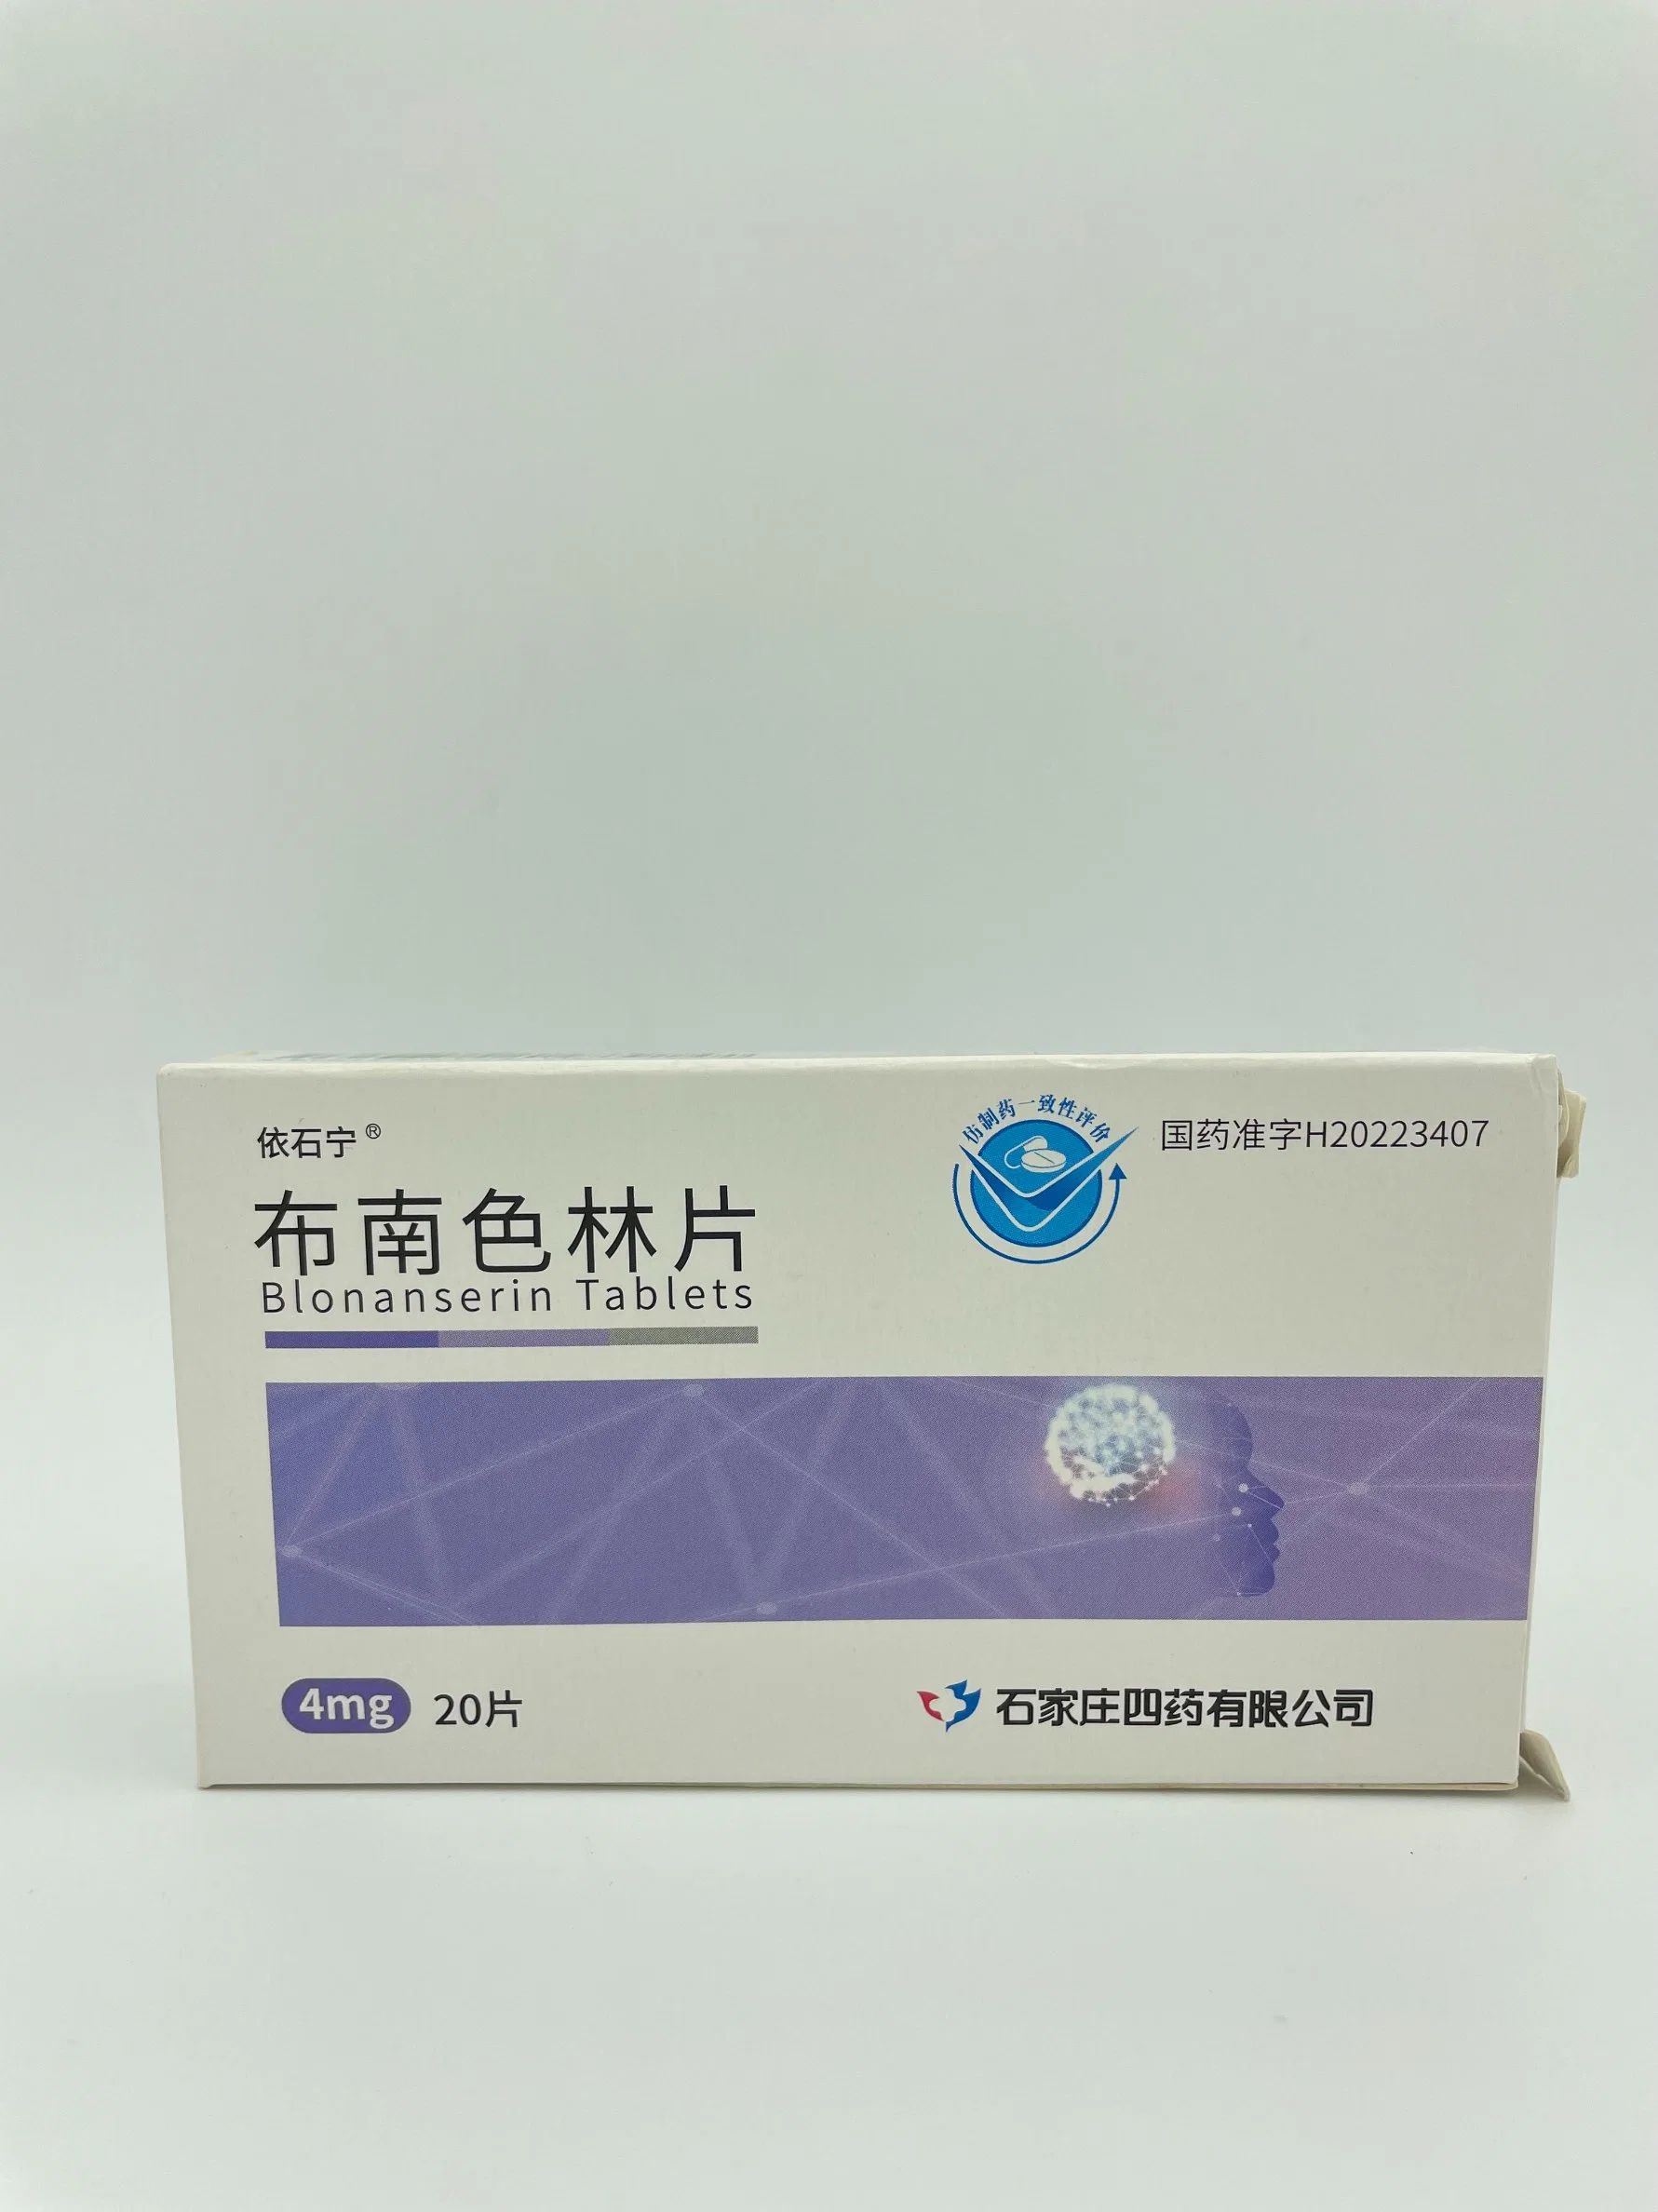 Blonanserin Tablets, Oral Preparation, Drug